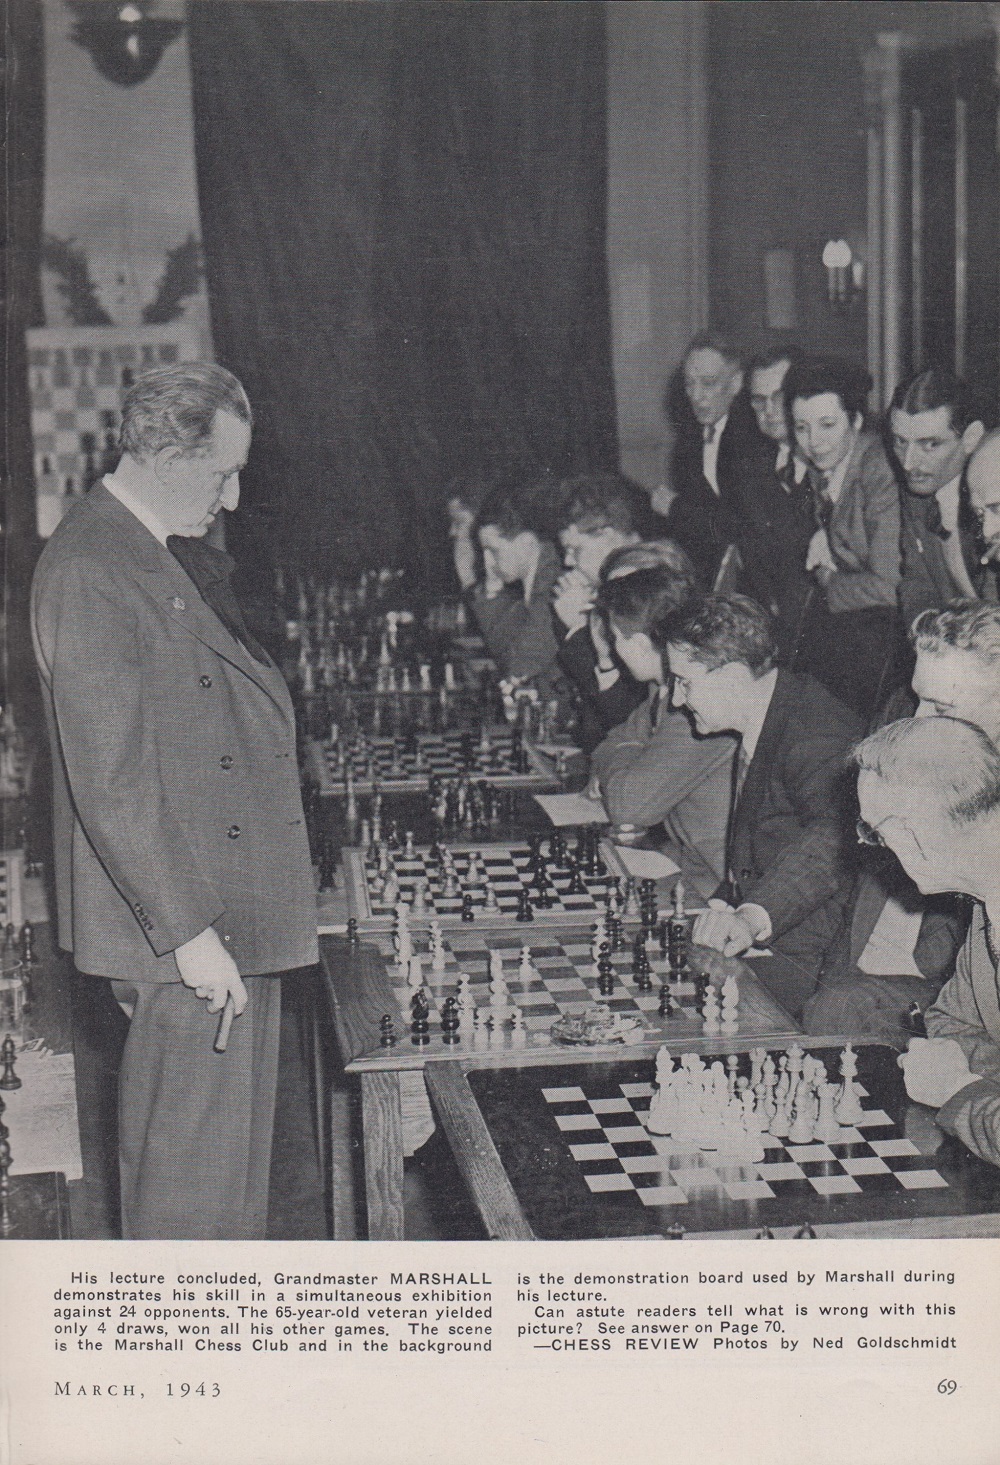 Capablanca's Novelty Counter: Capablanca vs. Marshall,New York 1918 – Chess  Universe